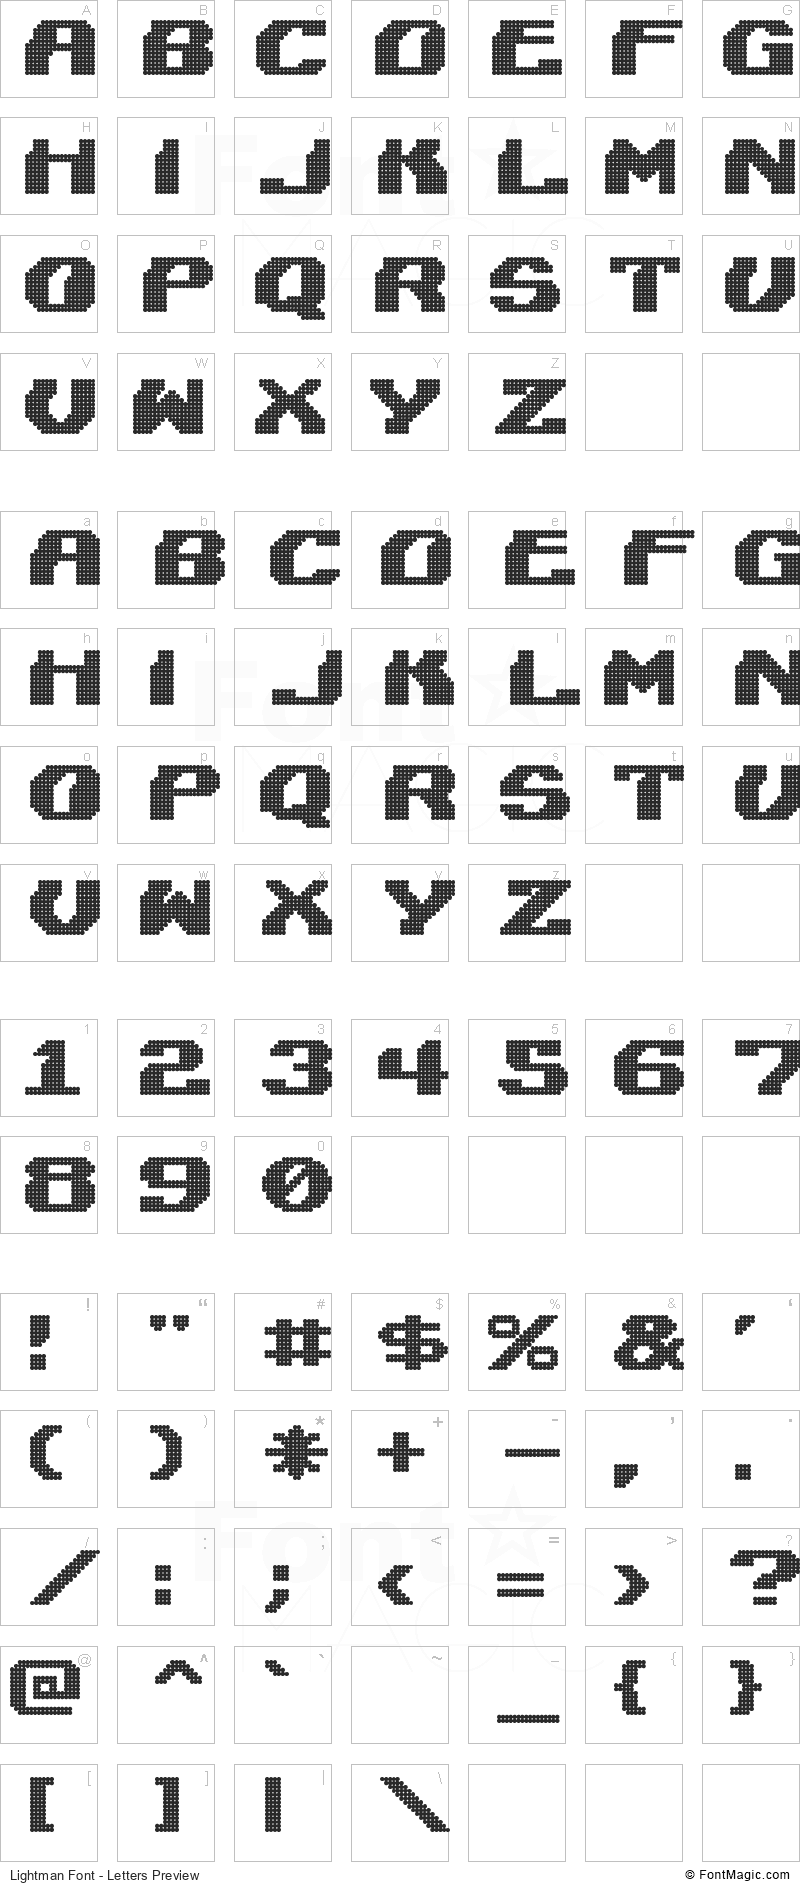 Lightman Font - All Latters Preview Chart